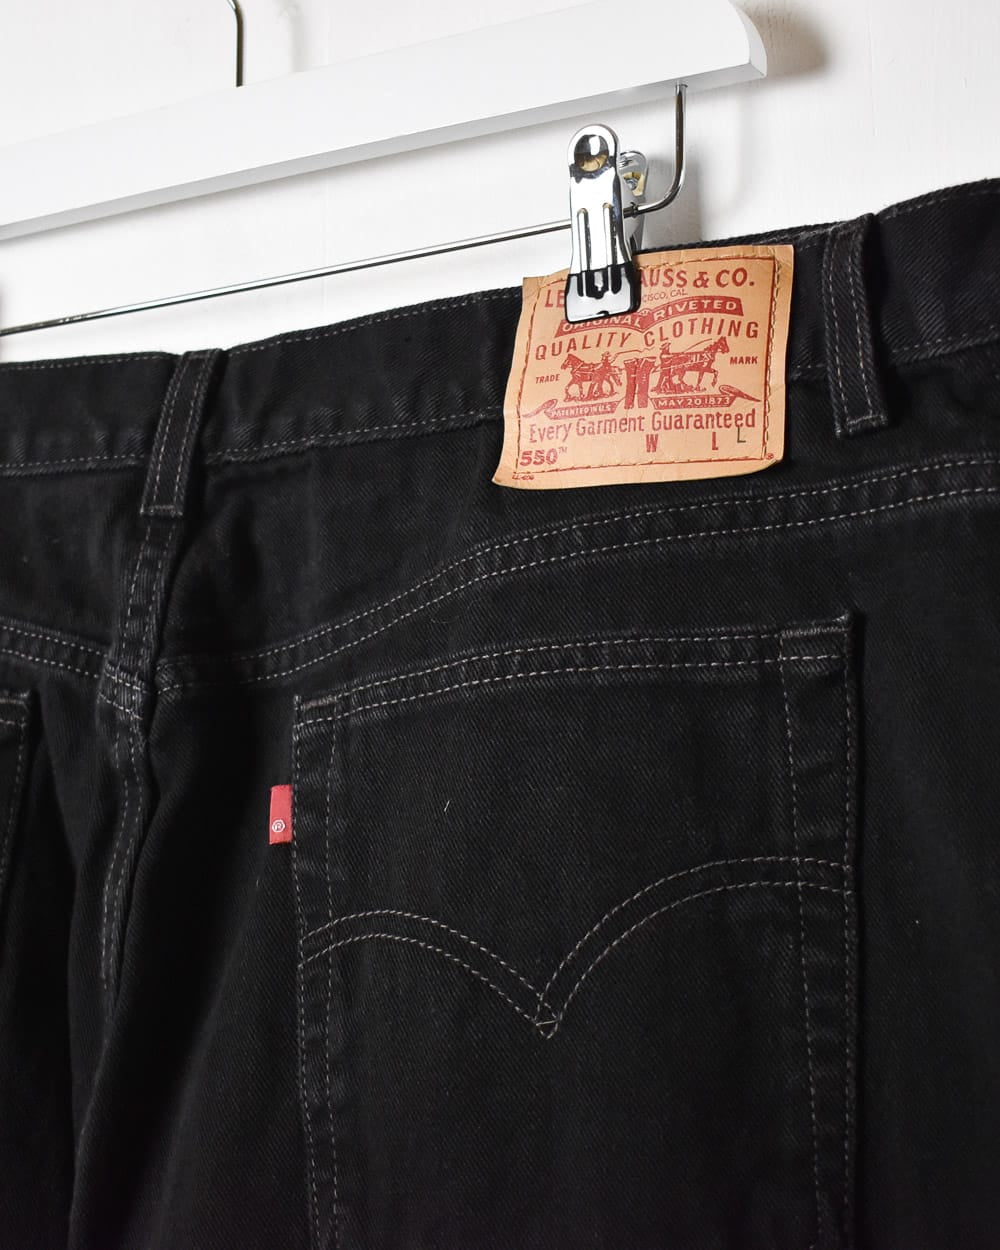 Black Levi's 550 Jeans - W32 L33